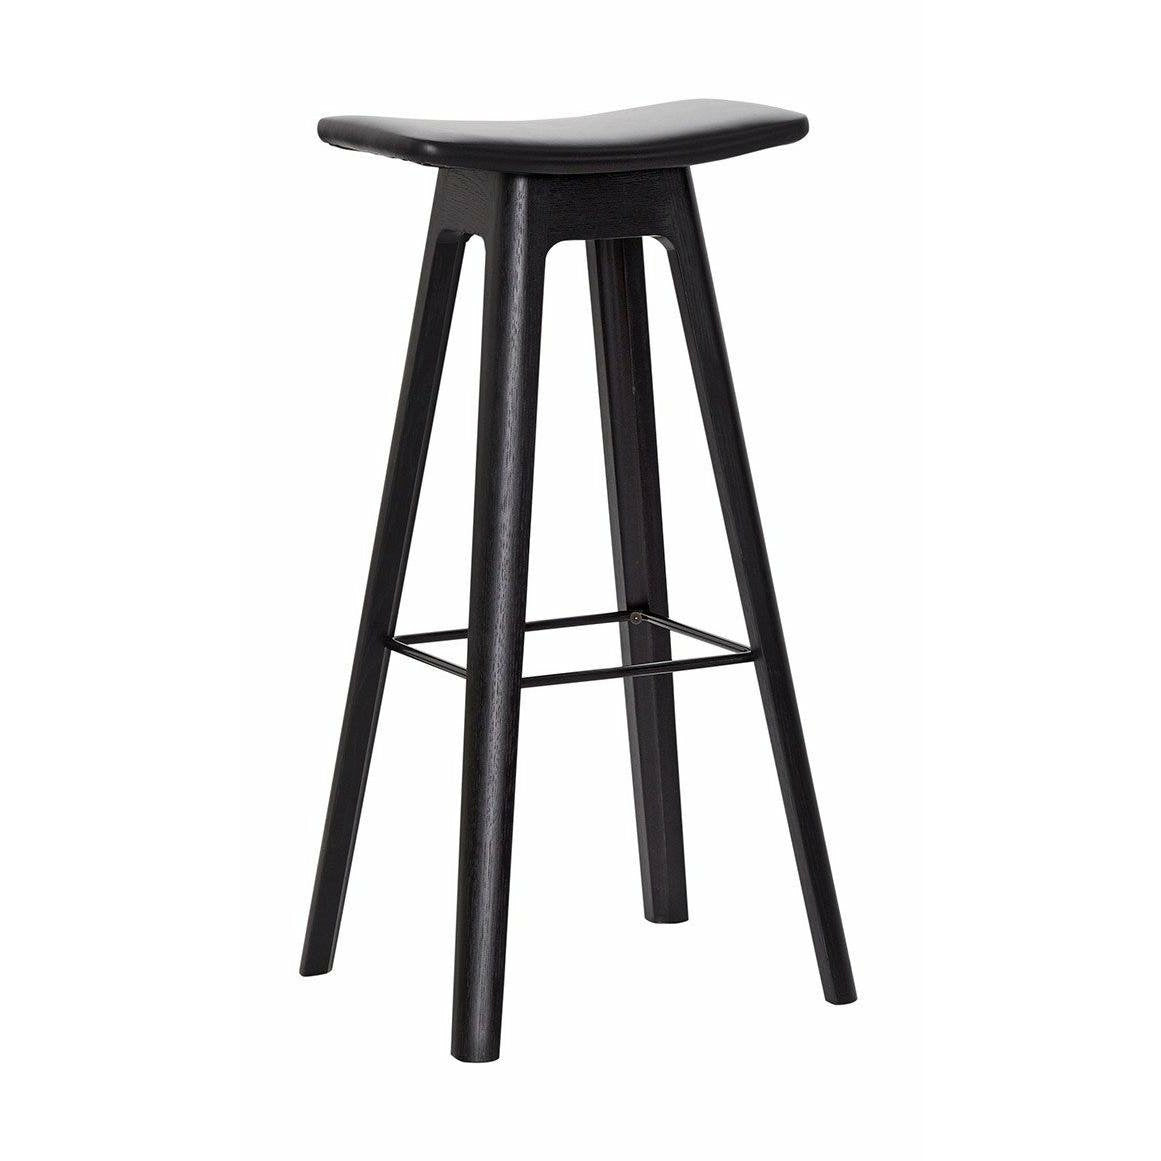 Andersen Furniture HC1 Barstol svart ek, svart läderstol, h 80 cm